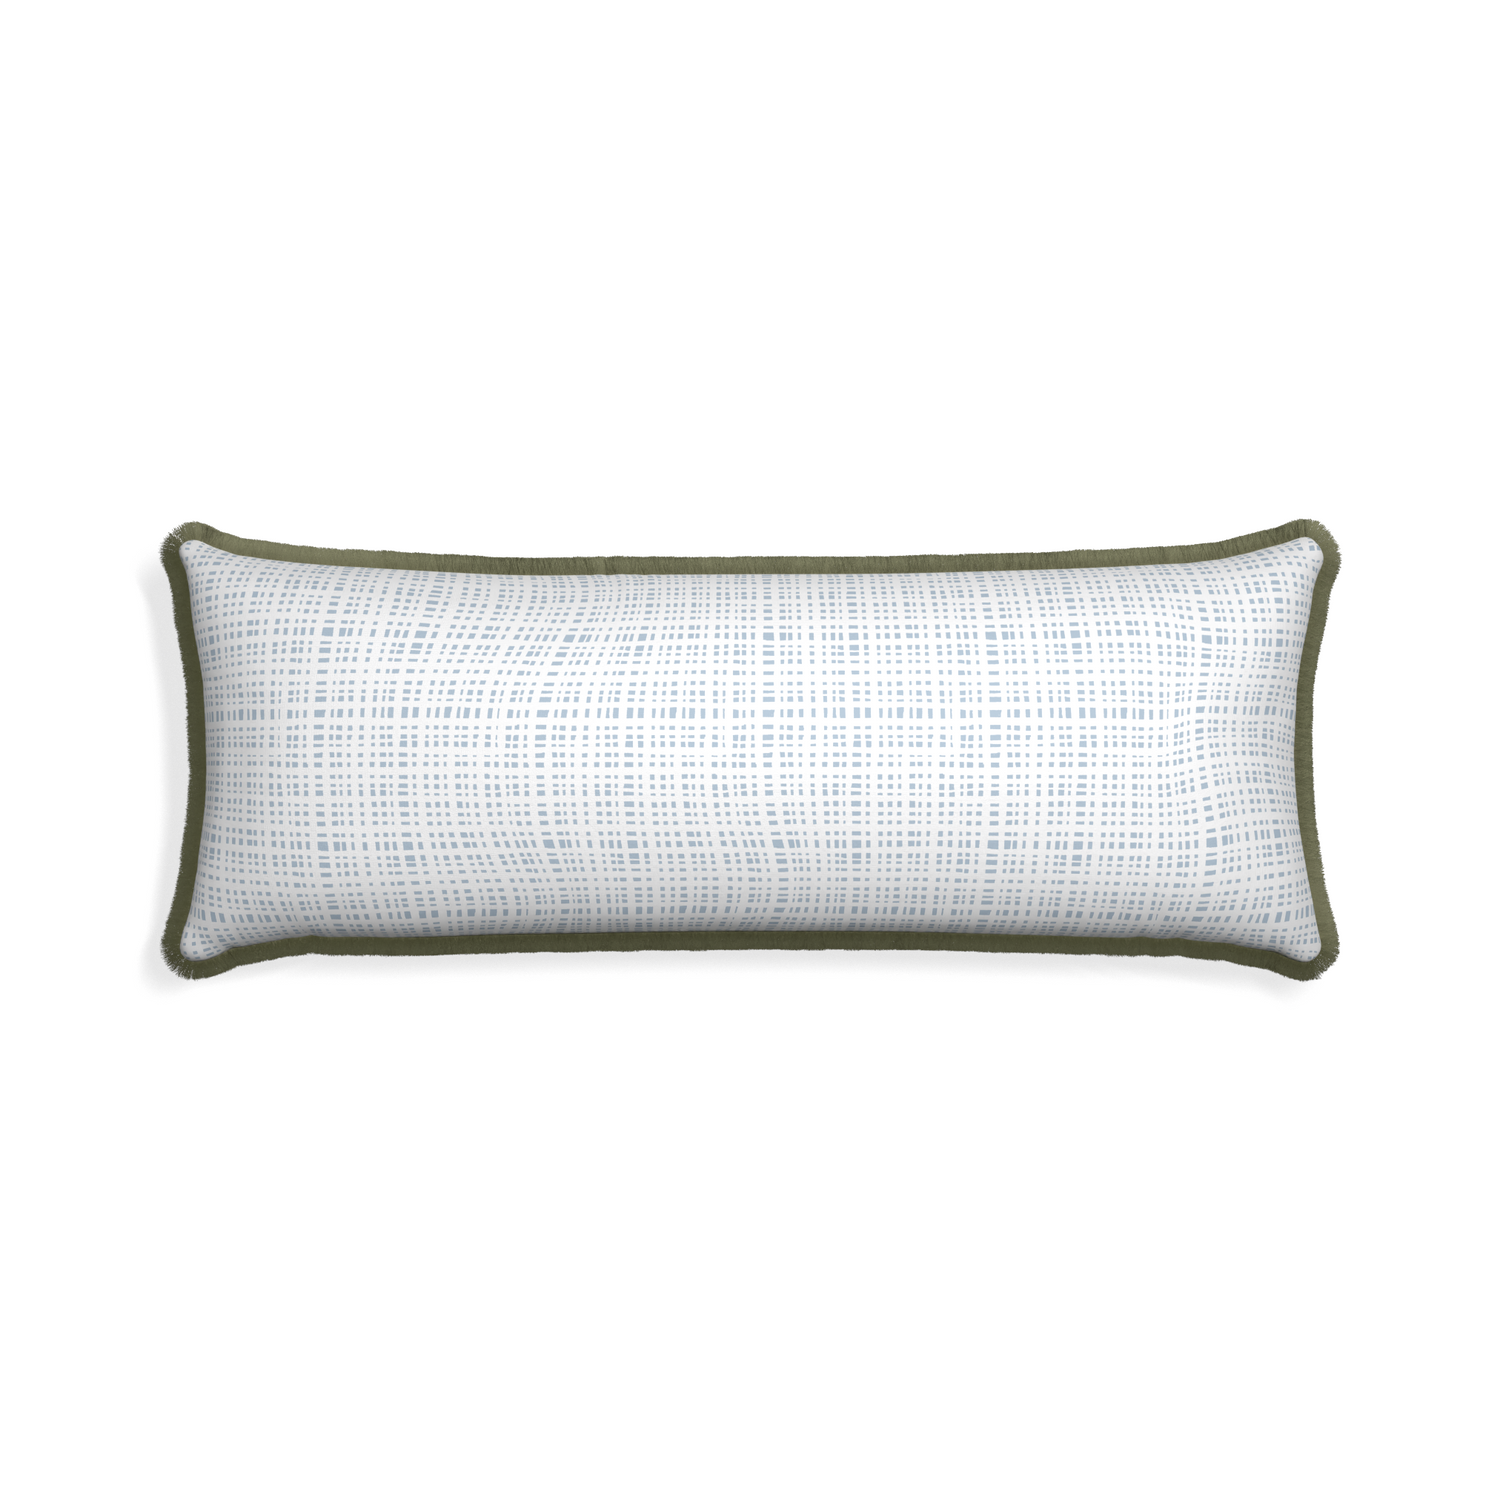 Xl-lumbar ginger sky custom pillow with sage fringe on white background